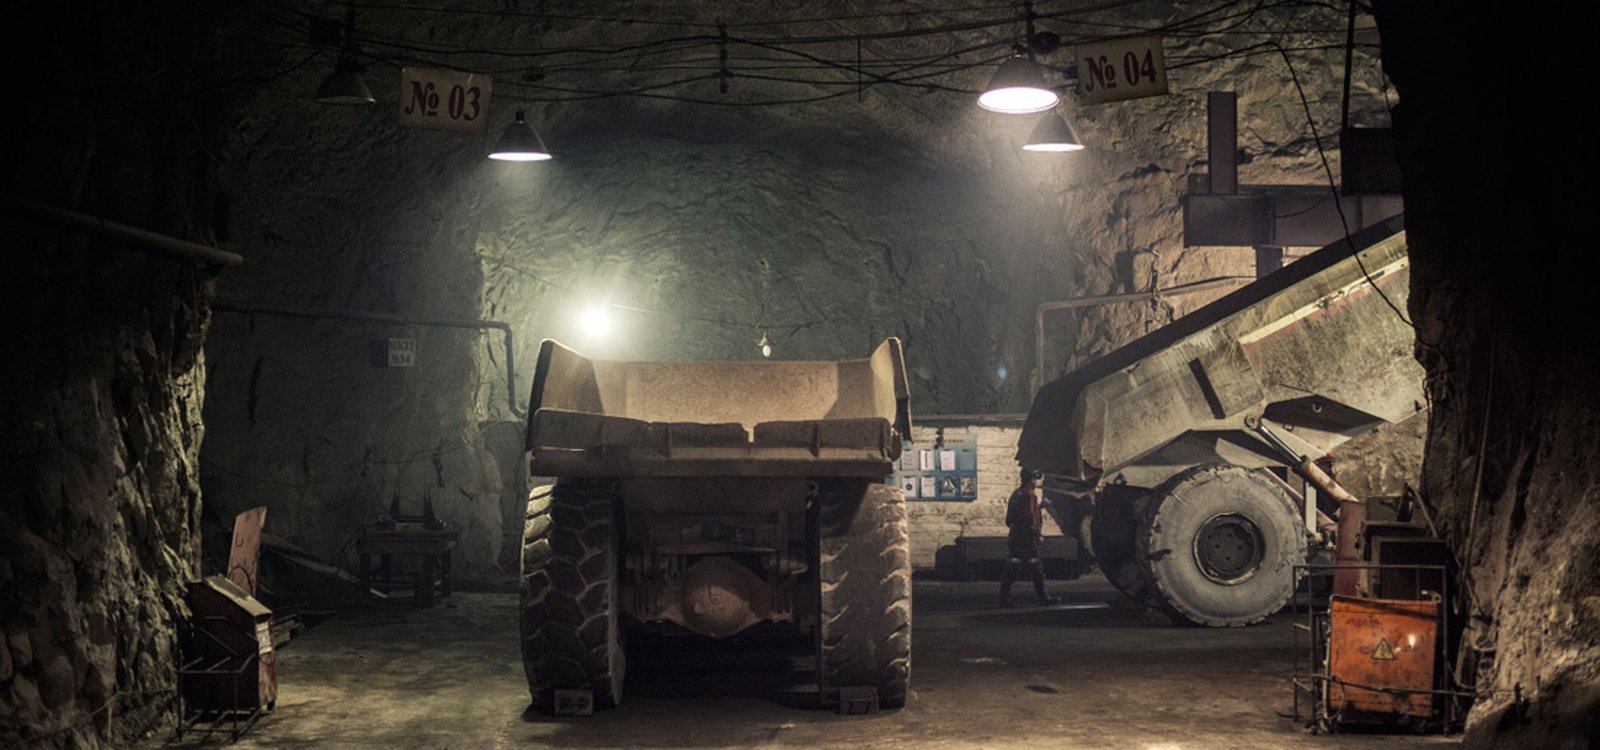 Sandvik has supplied Toro 50 dump trucks and LH 514 loaders to the mine.